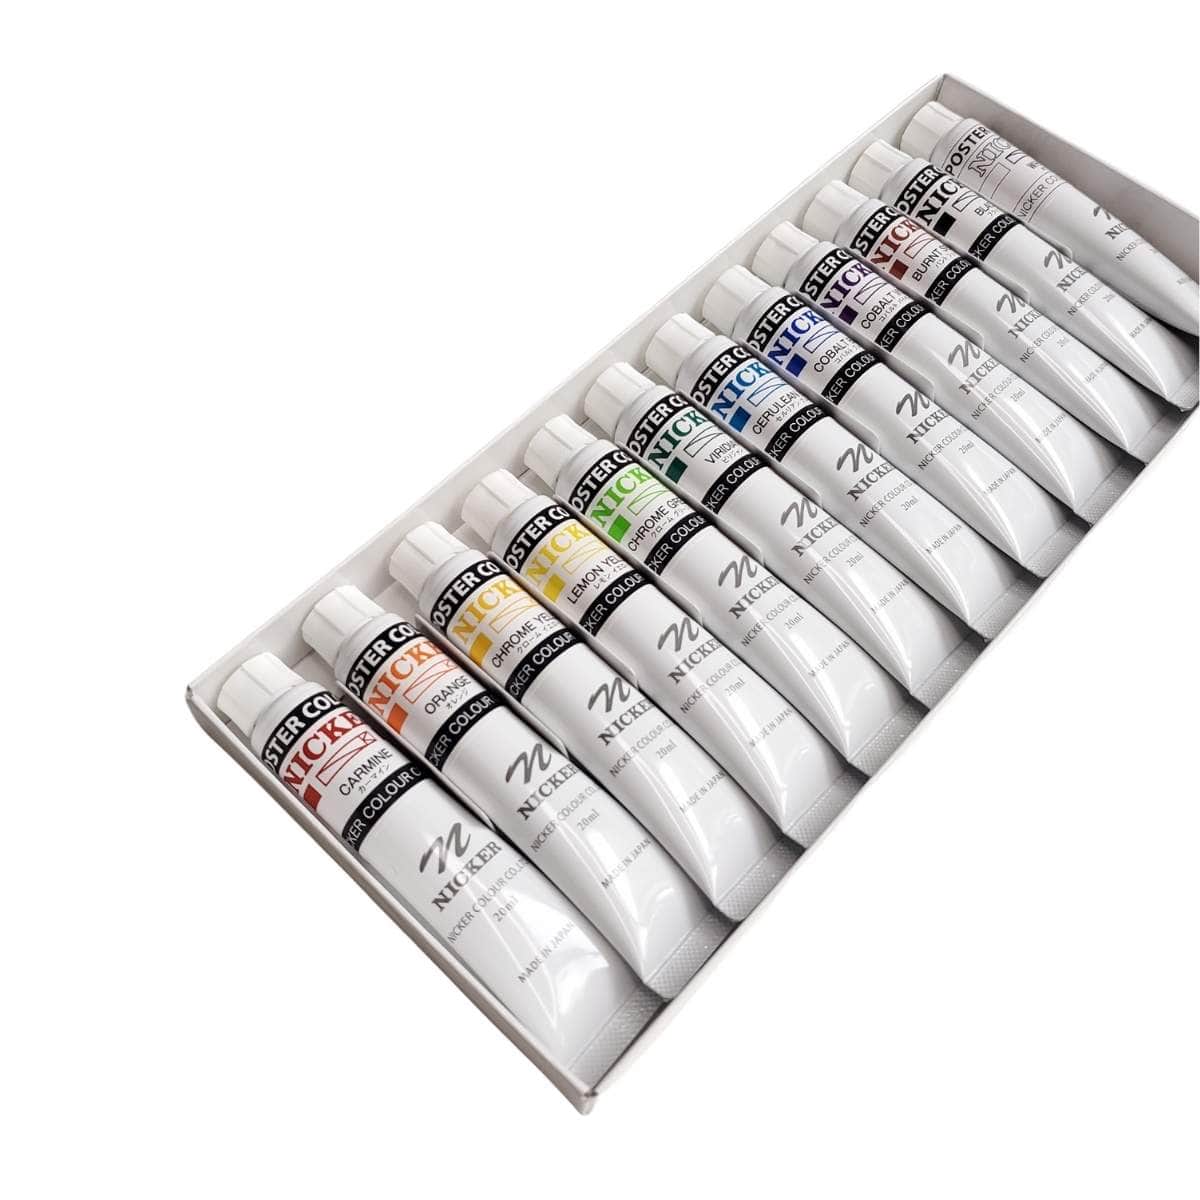 Nicker - Designers Colour Gouache - Set of 12 Colours - 20mL Tubes - I –  Gwartzman's Art Supplies